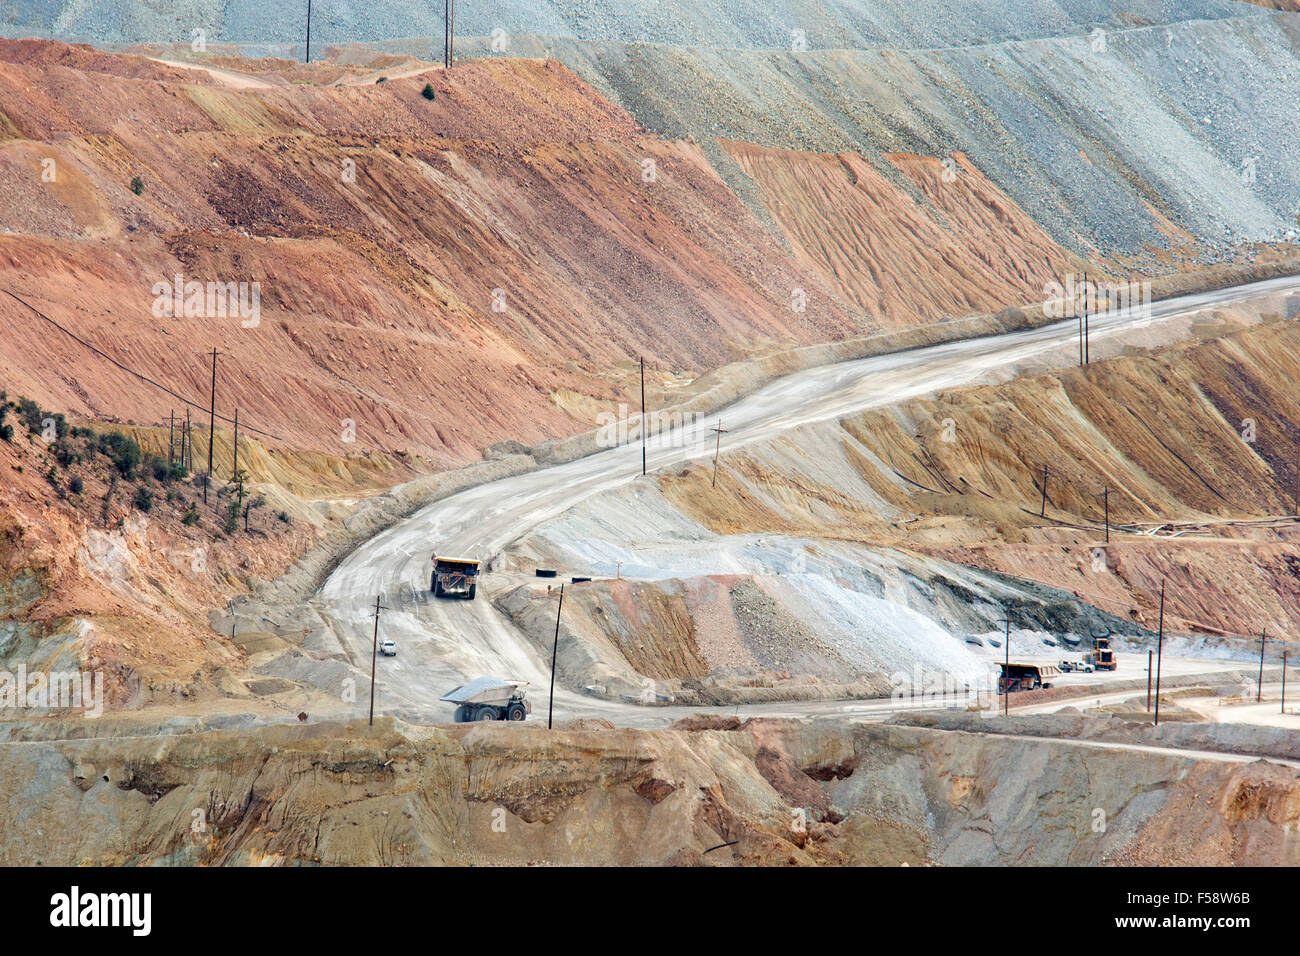 Santa Rita, New-Mexico - The Chino Kupfer Tagebau, betrieben von Freeport-McMoRan, produziert Kupfer und Molybdän. Stockfoto